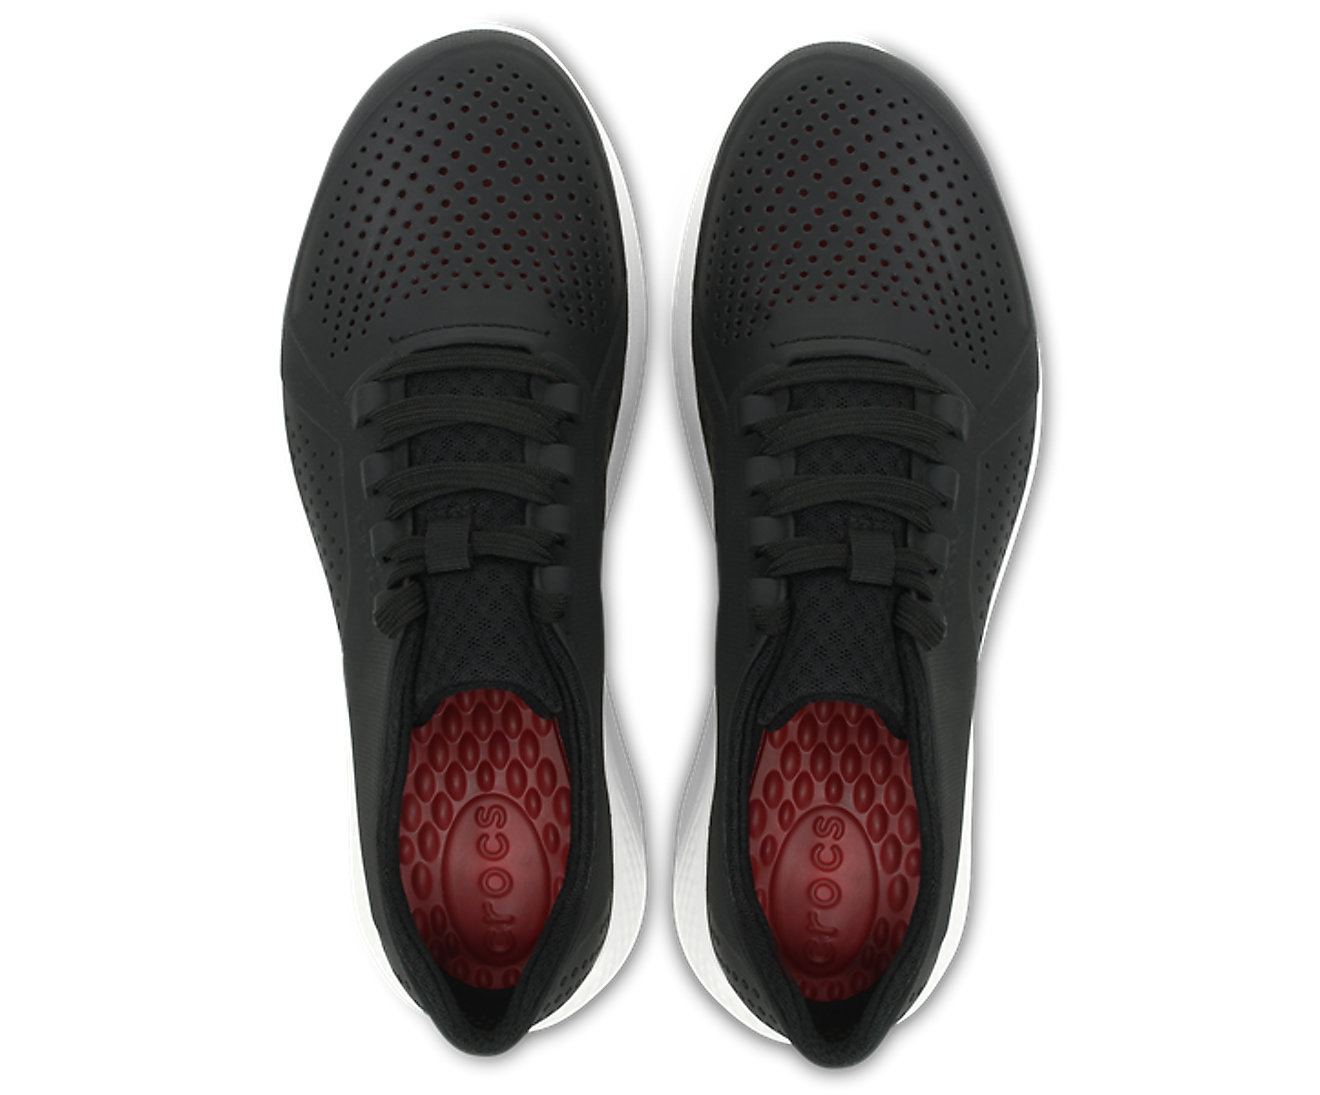 Crocs Women's LiteRide Pacer Shoes Sneakers - Black